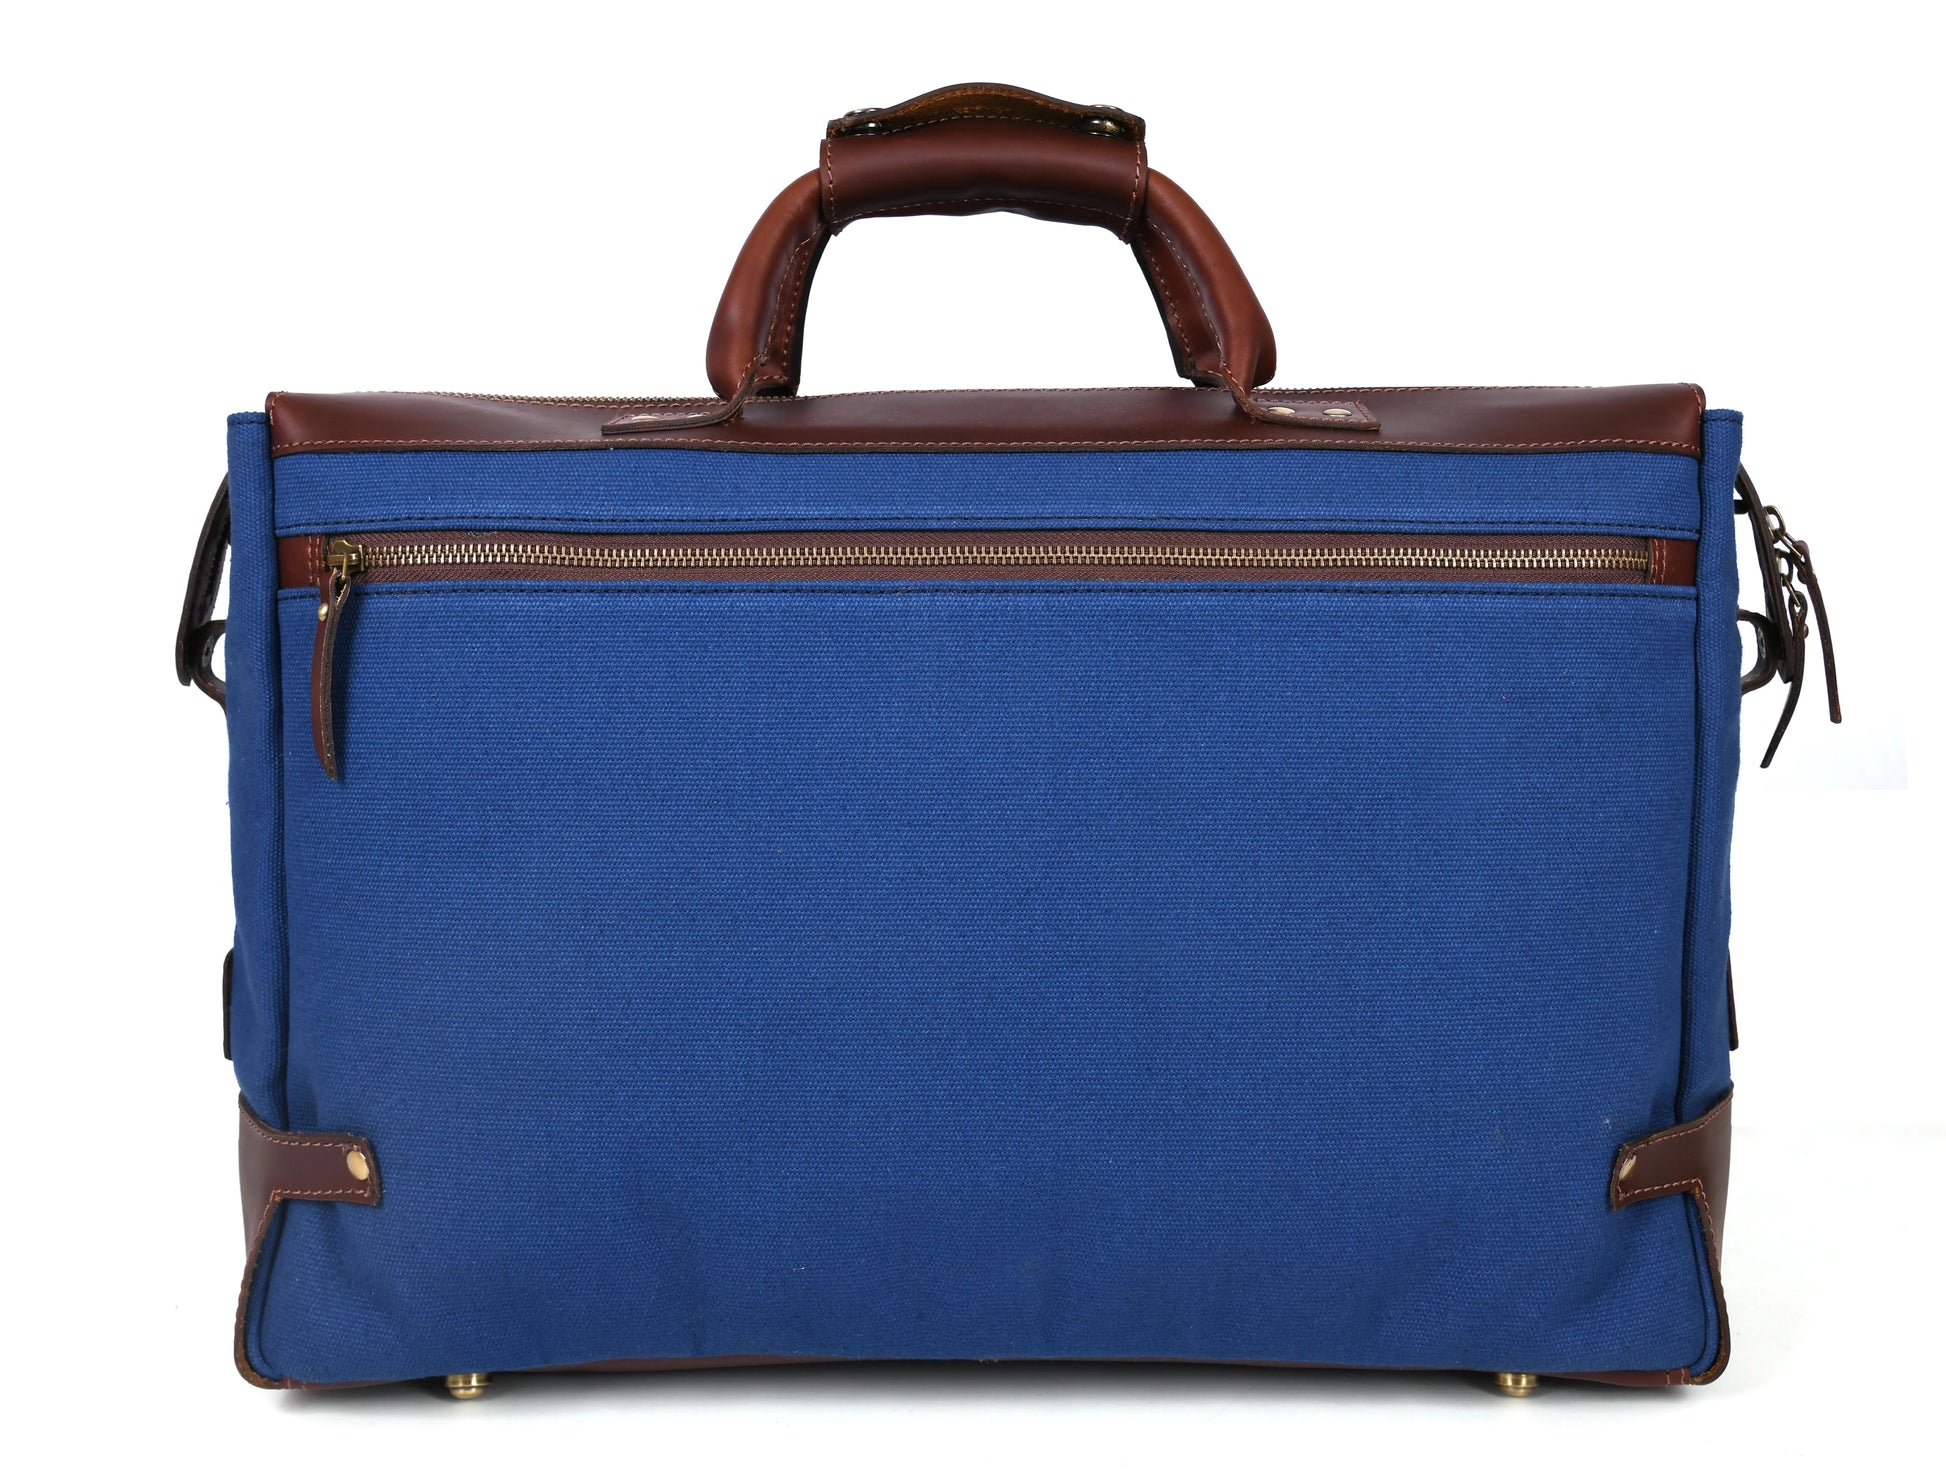 Leather Canvas Travel Bag - Blue back